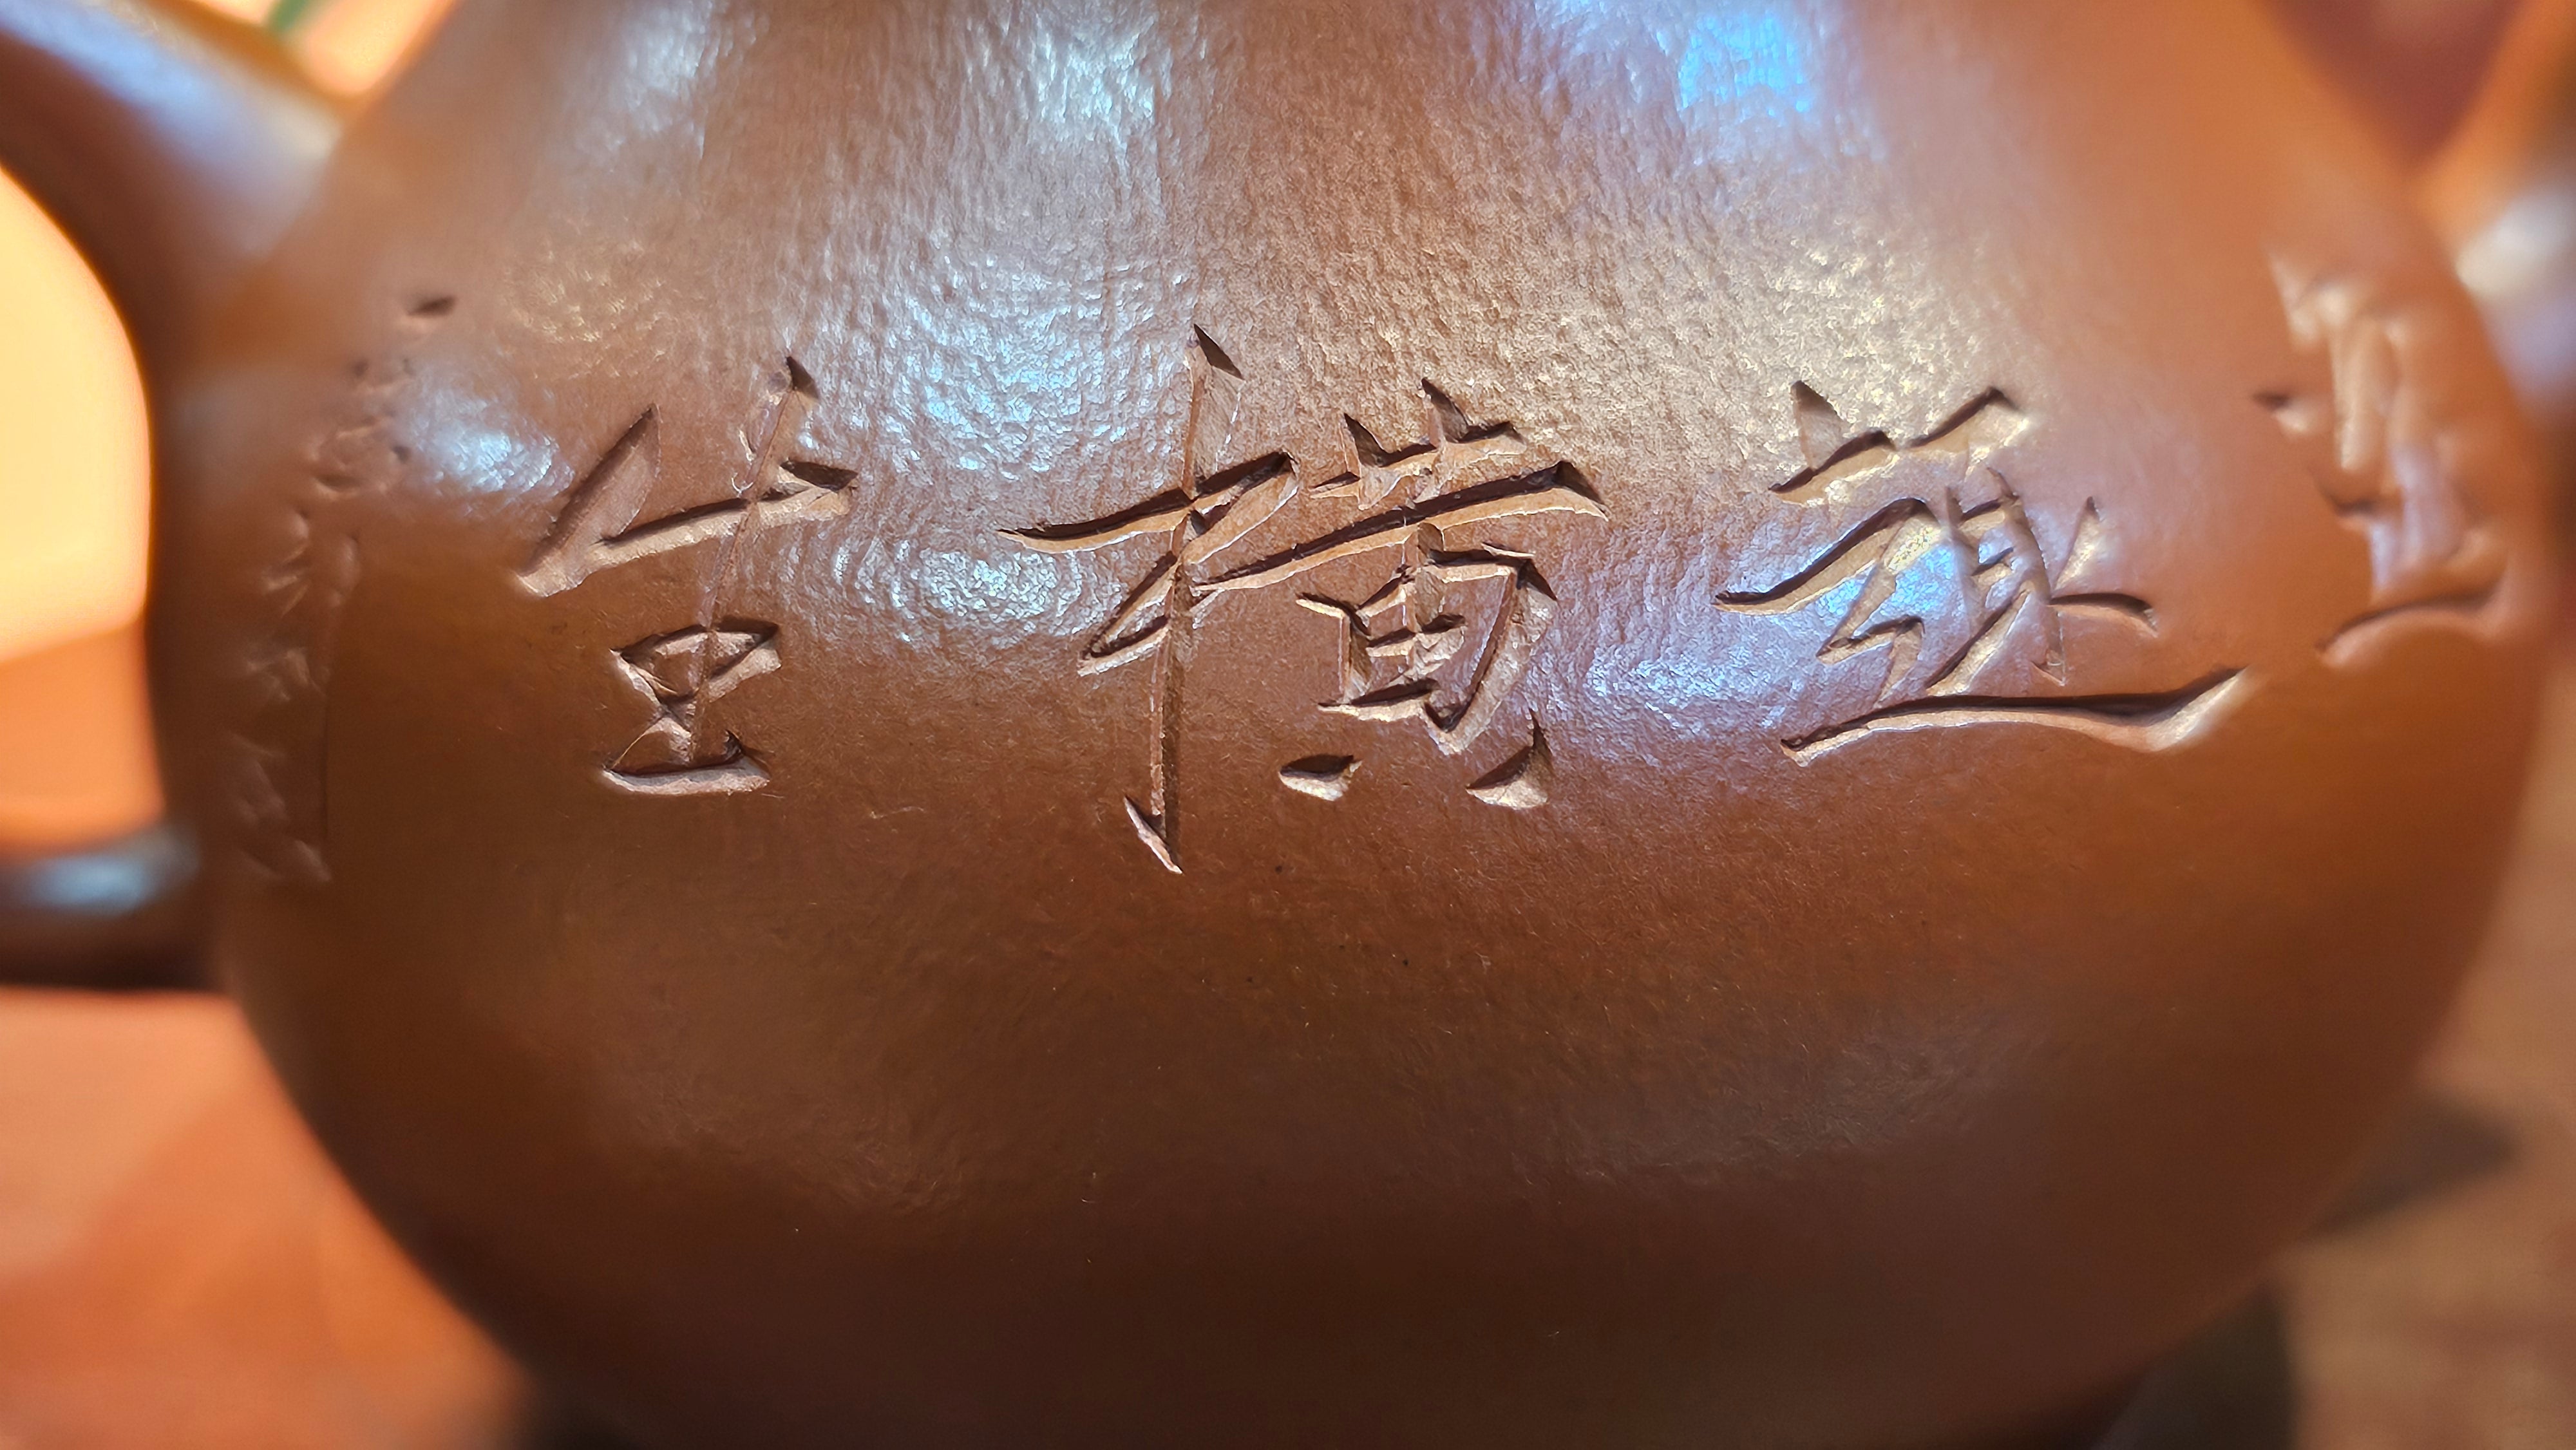 Li Xing 梨形, 181.3ml, Xiao Mei Yao Zhu Ni 小煤窑朱泥, by Craftsman Wang Xing 王兴, Engraving by Craftsman Ding Tie Ping 丁铁平 (Artistic Byname 一德).